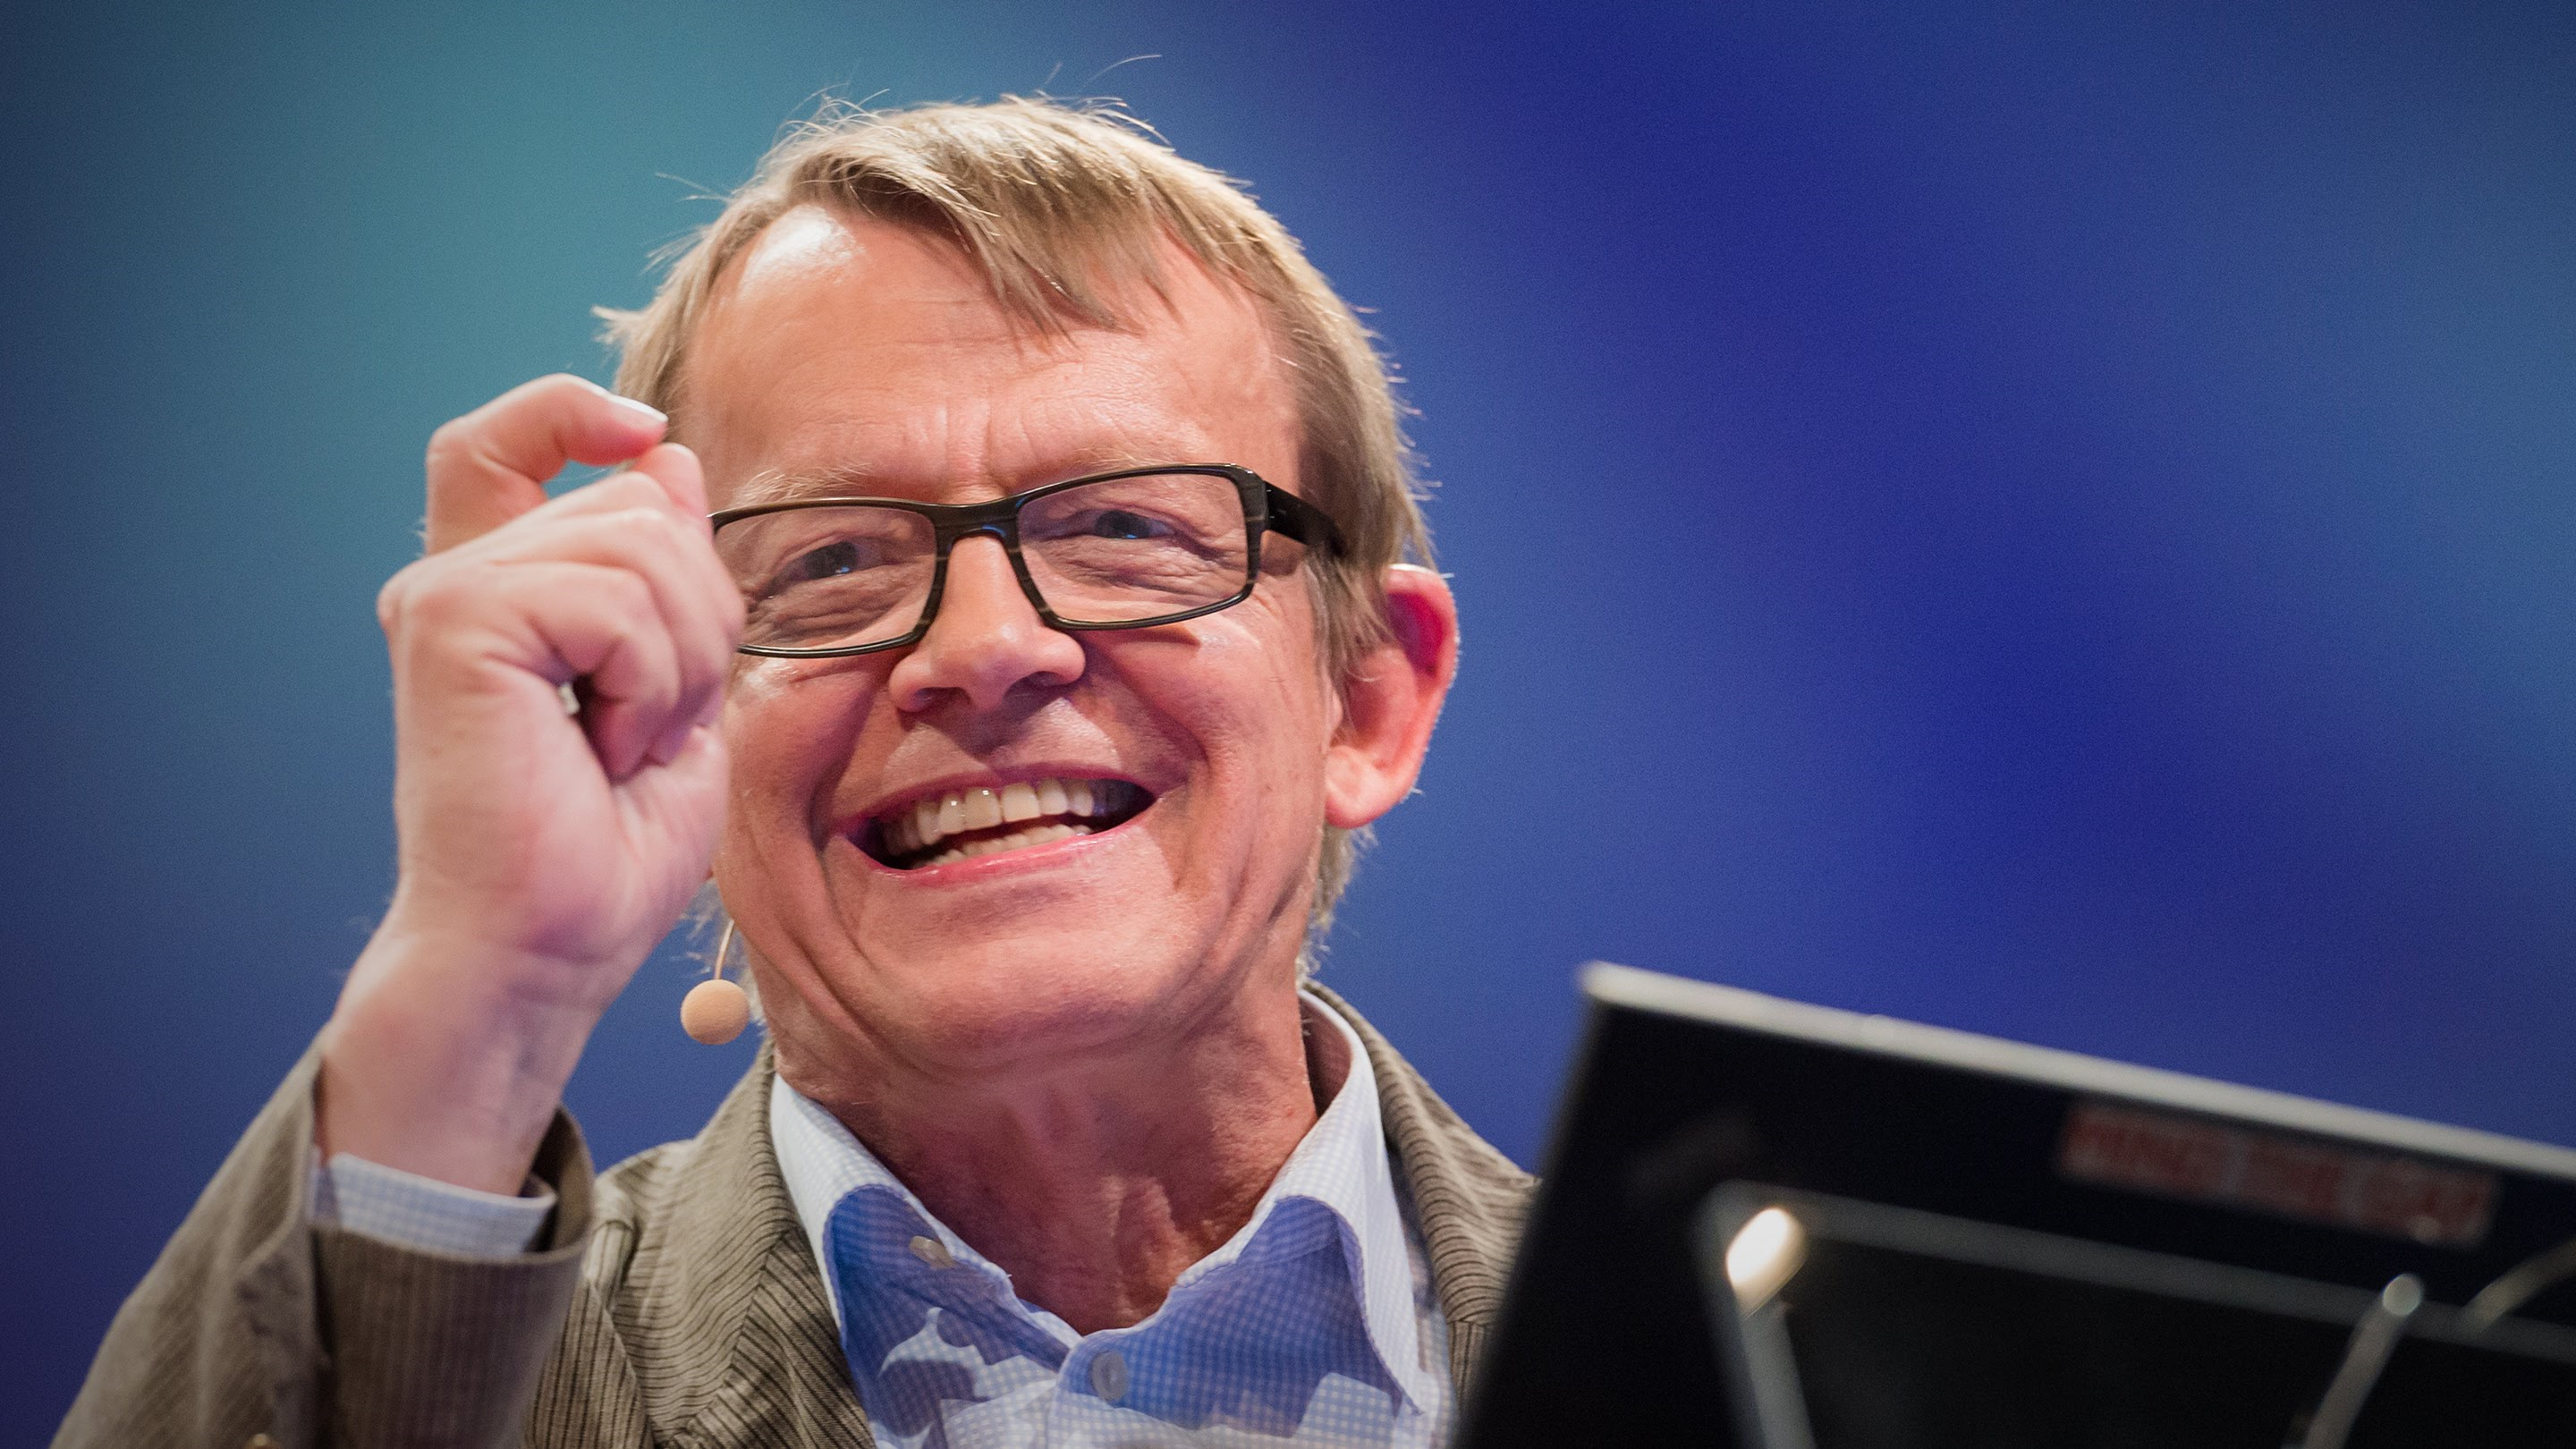 Hans Rosling - ignorance's greatest enemy